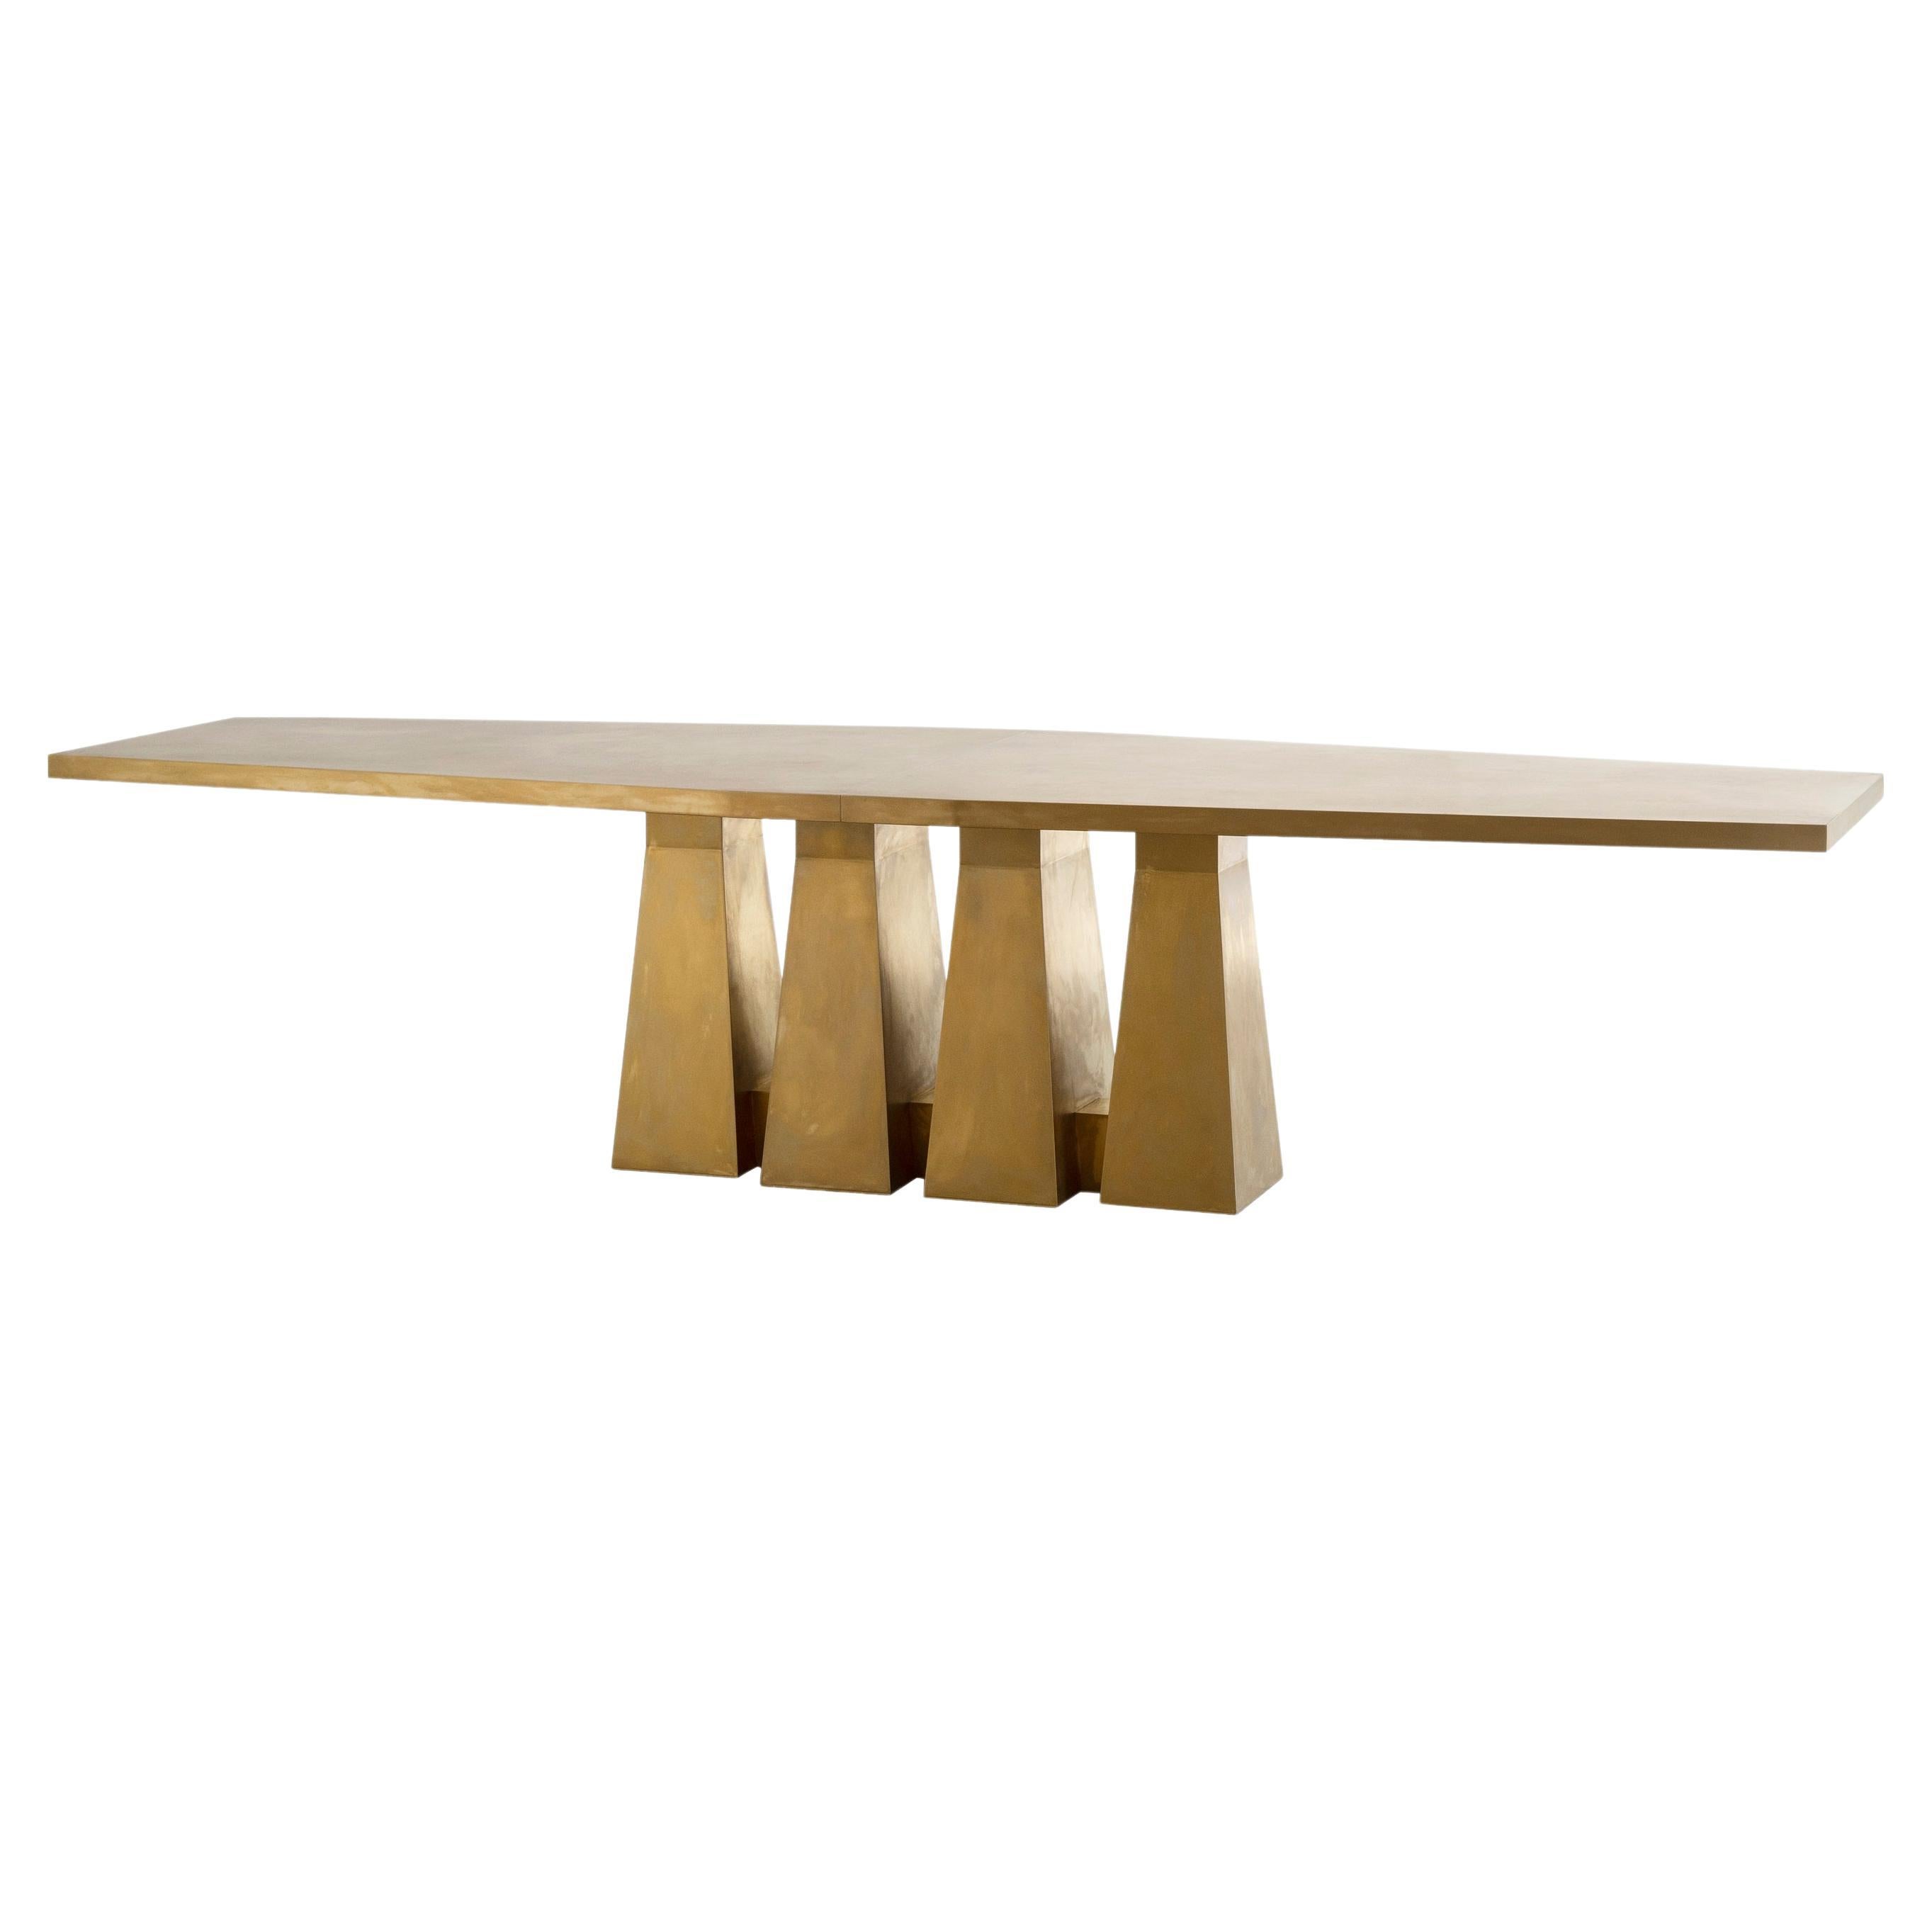 The Gate #01, Long Table/ Desk by Singchan Design Borderland Series